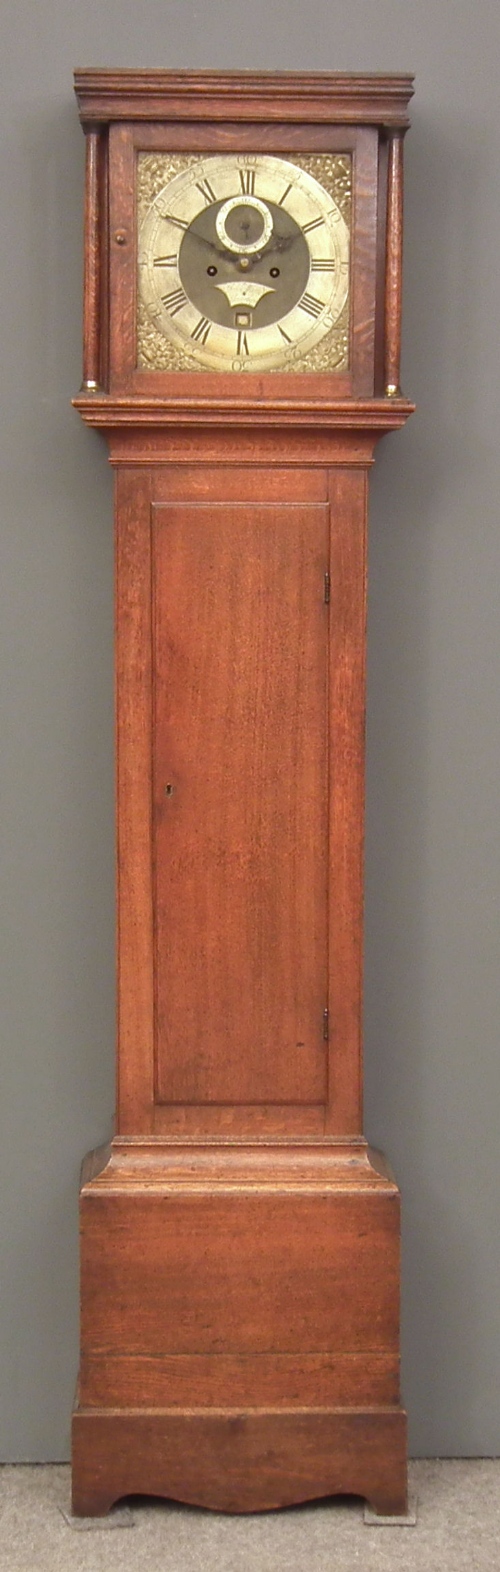 An 18th Century oak longcase clock